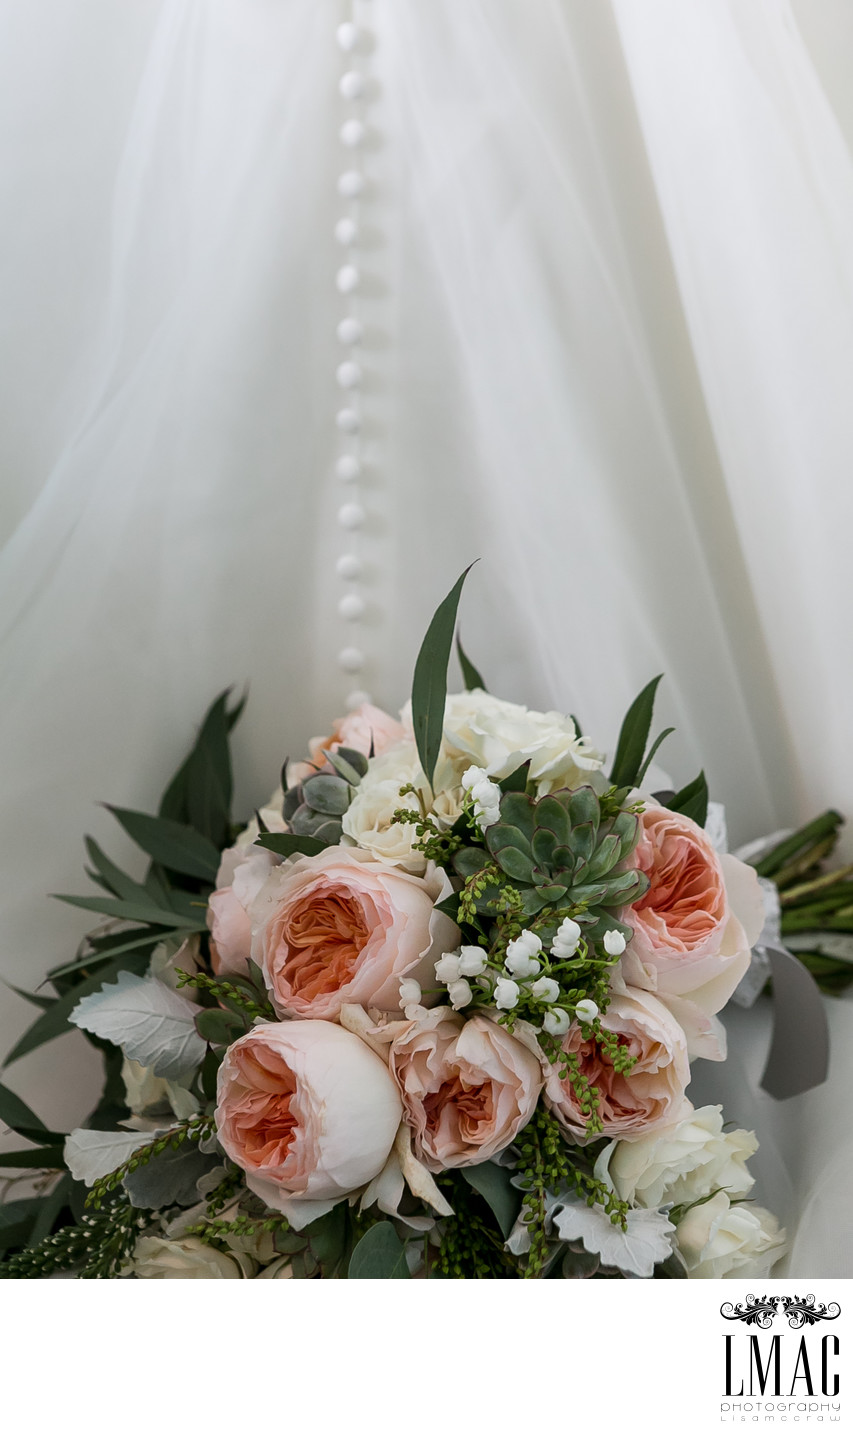 Gorgeous Bridal Bouquet and Wedding Detail Photos